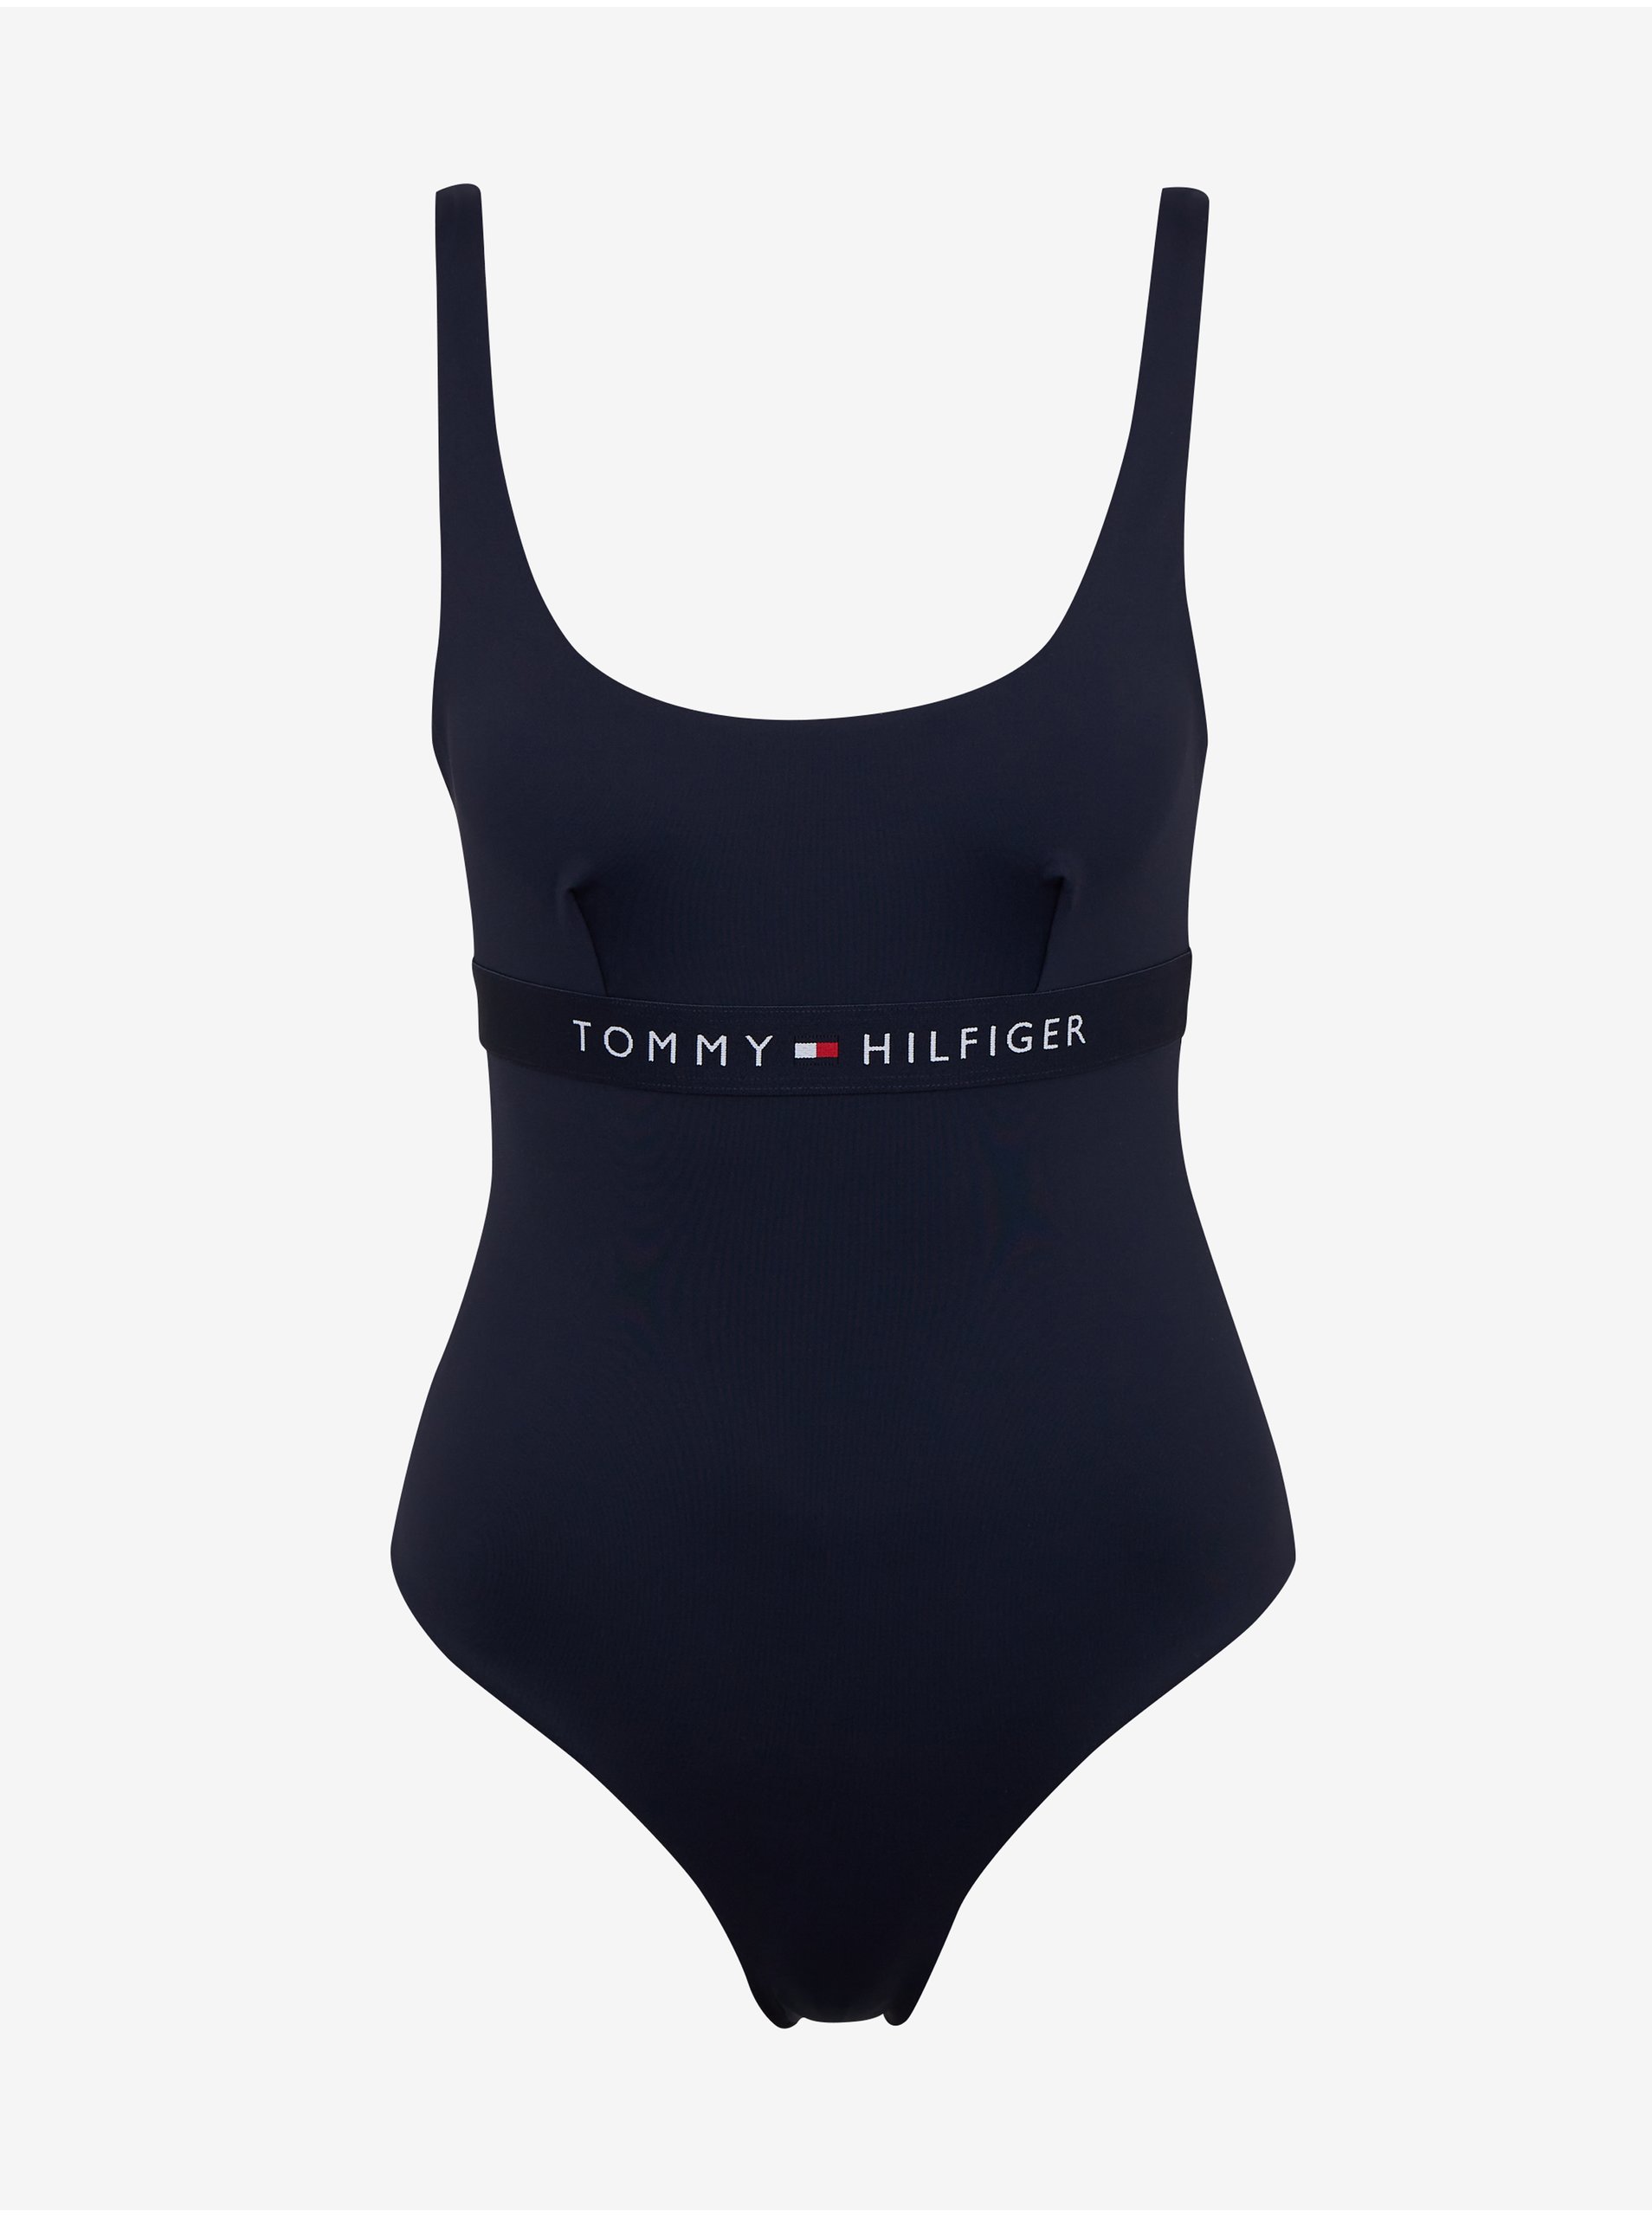 Lacno Tmavomodré dámske jednodielne plavky Tommy Hilfiger Underwear